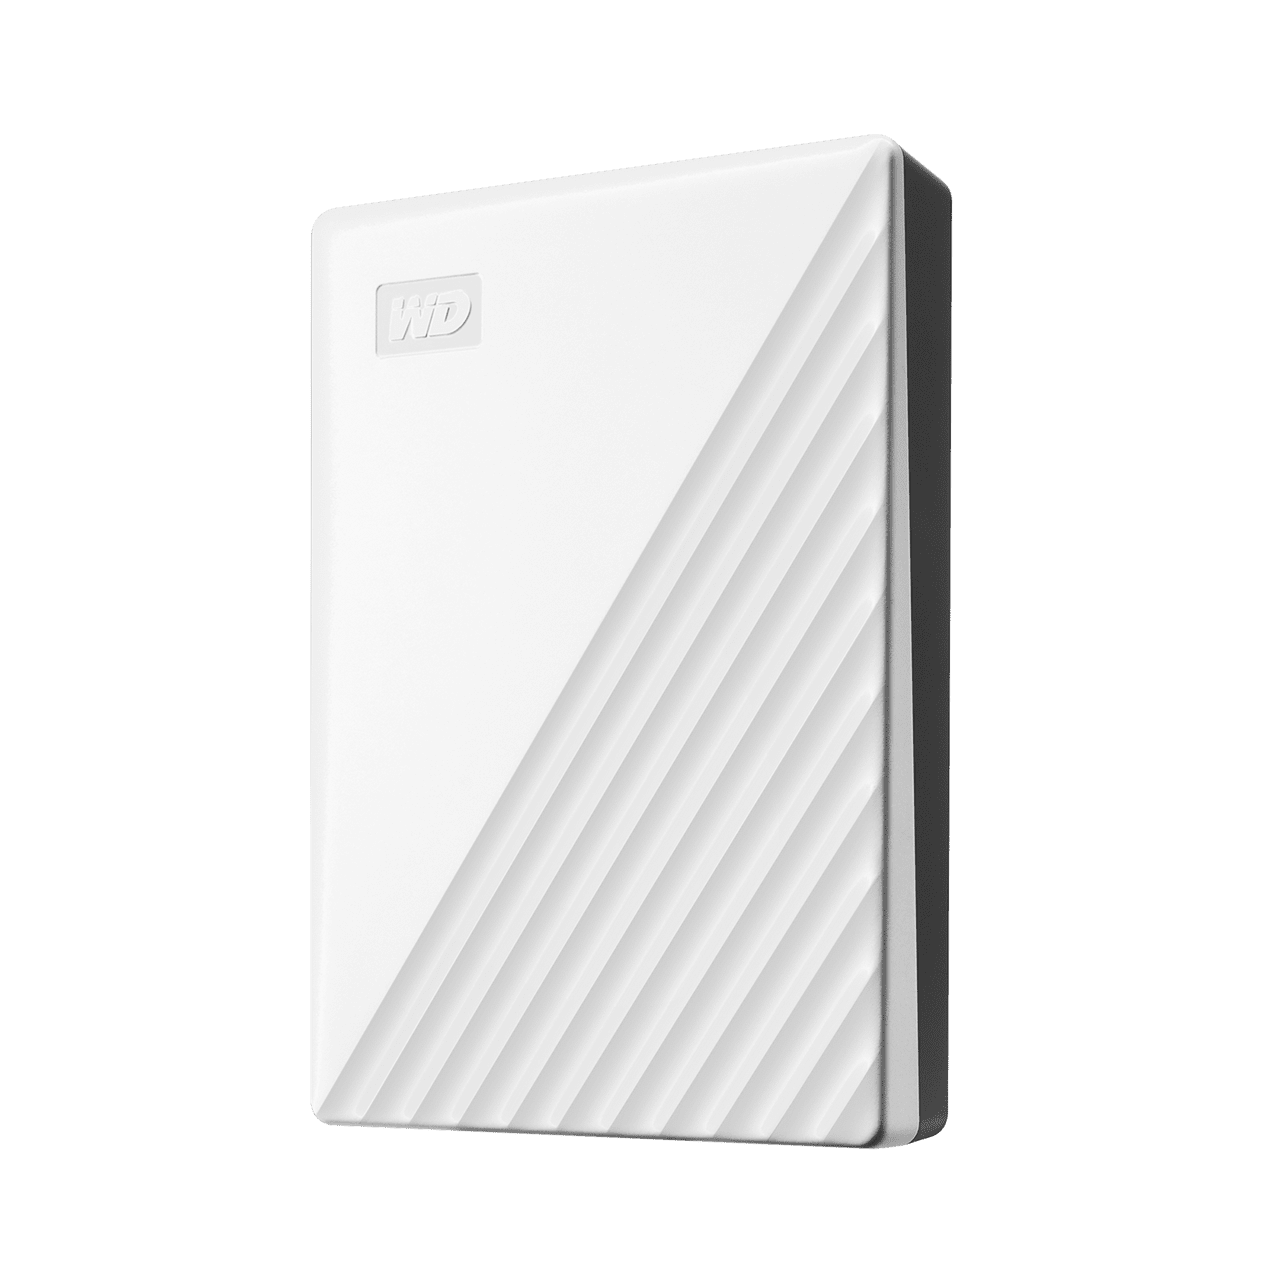 External My WD | HDD Western TB Drive Hard (1 TB) Digital Passport Portable to 5